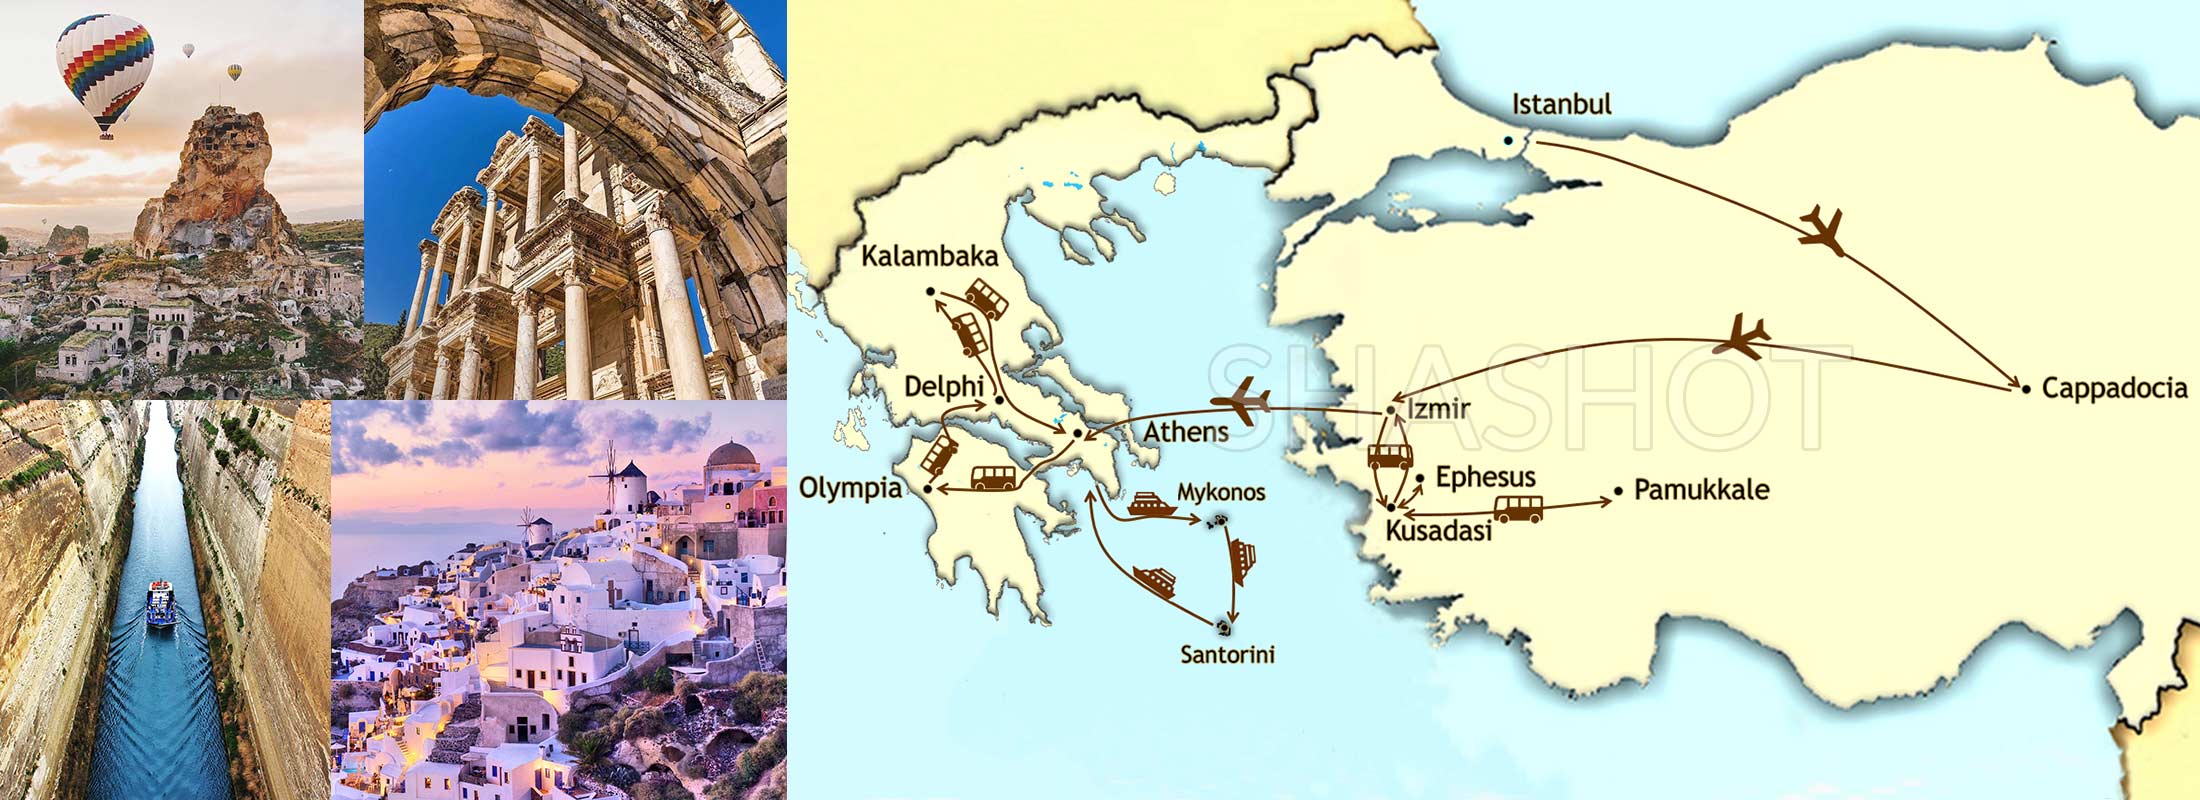 17 DAYS TURKEY GREECE PACKAGE TOUR ISTANBUL CAPPADOCIA PAMUKKALE EPHESUS ATHENS EPIDAURUS MYCENAE OLYMPIA DELPHI METEORA MYKONOS SANTORINI